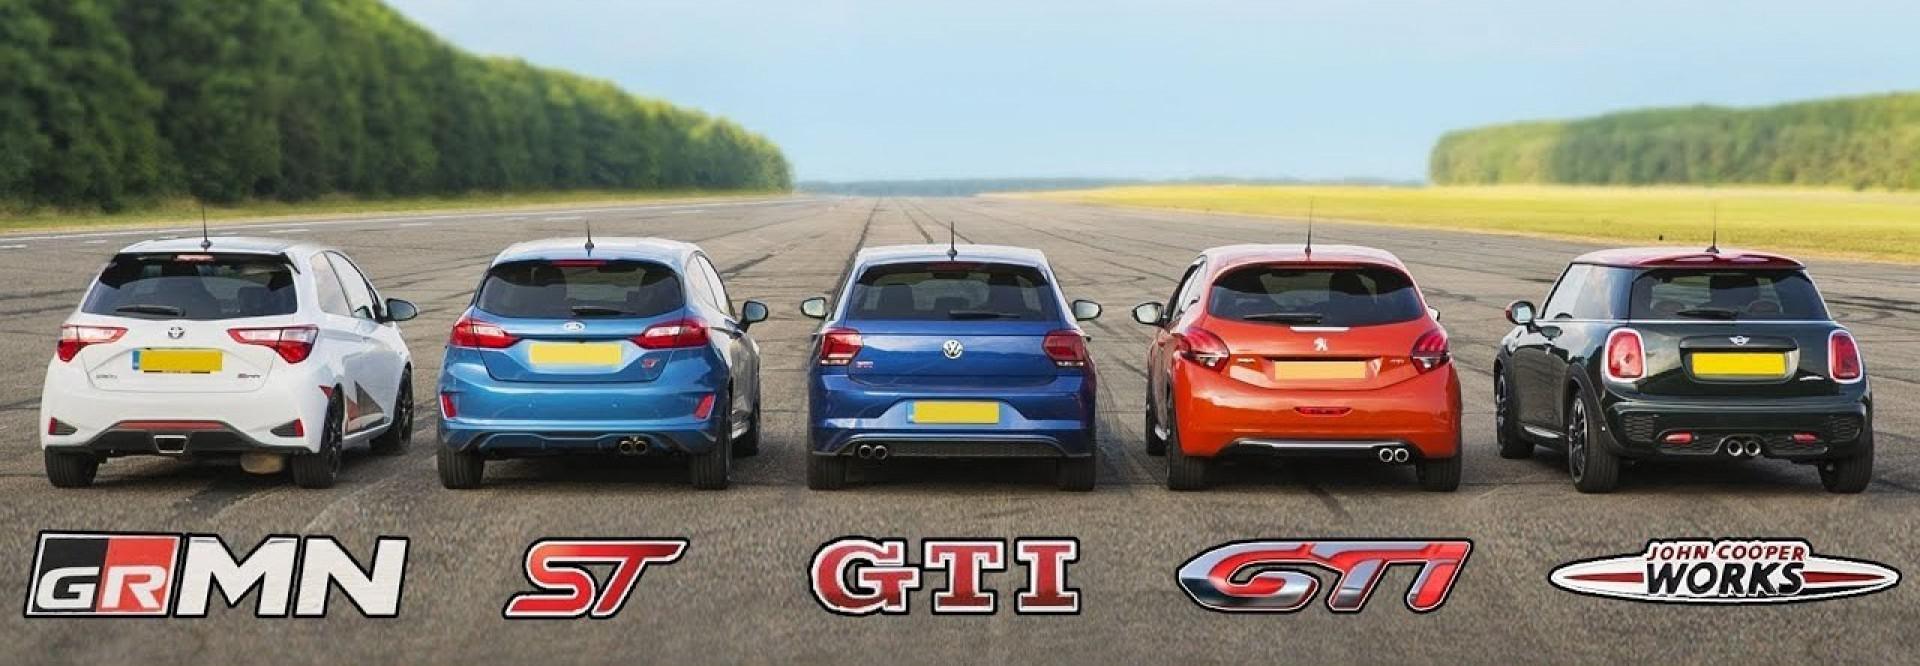 Quelle sportive se classera en première position ? Polo GTI vs Fiesta ST vs Mini JCW vs Yaris GRMN vs 208 GTi